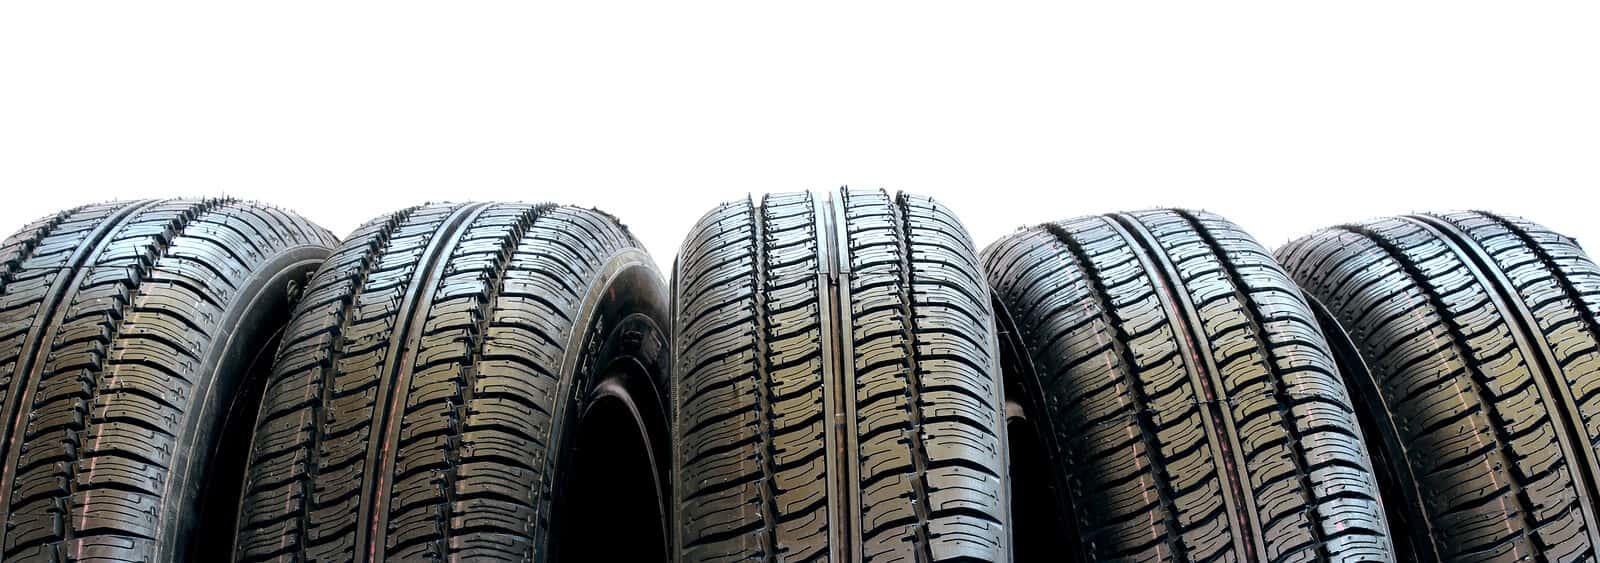 Set of Tires